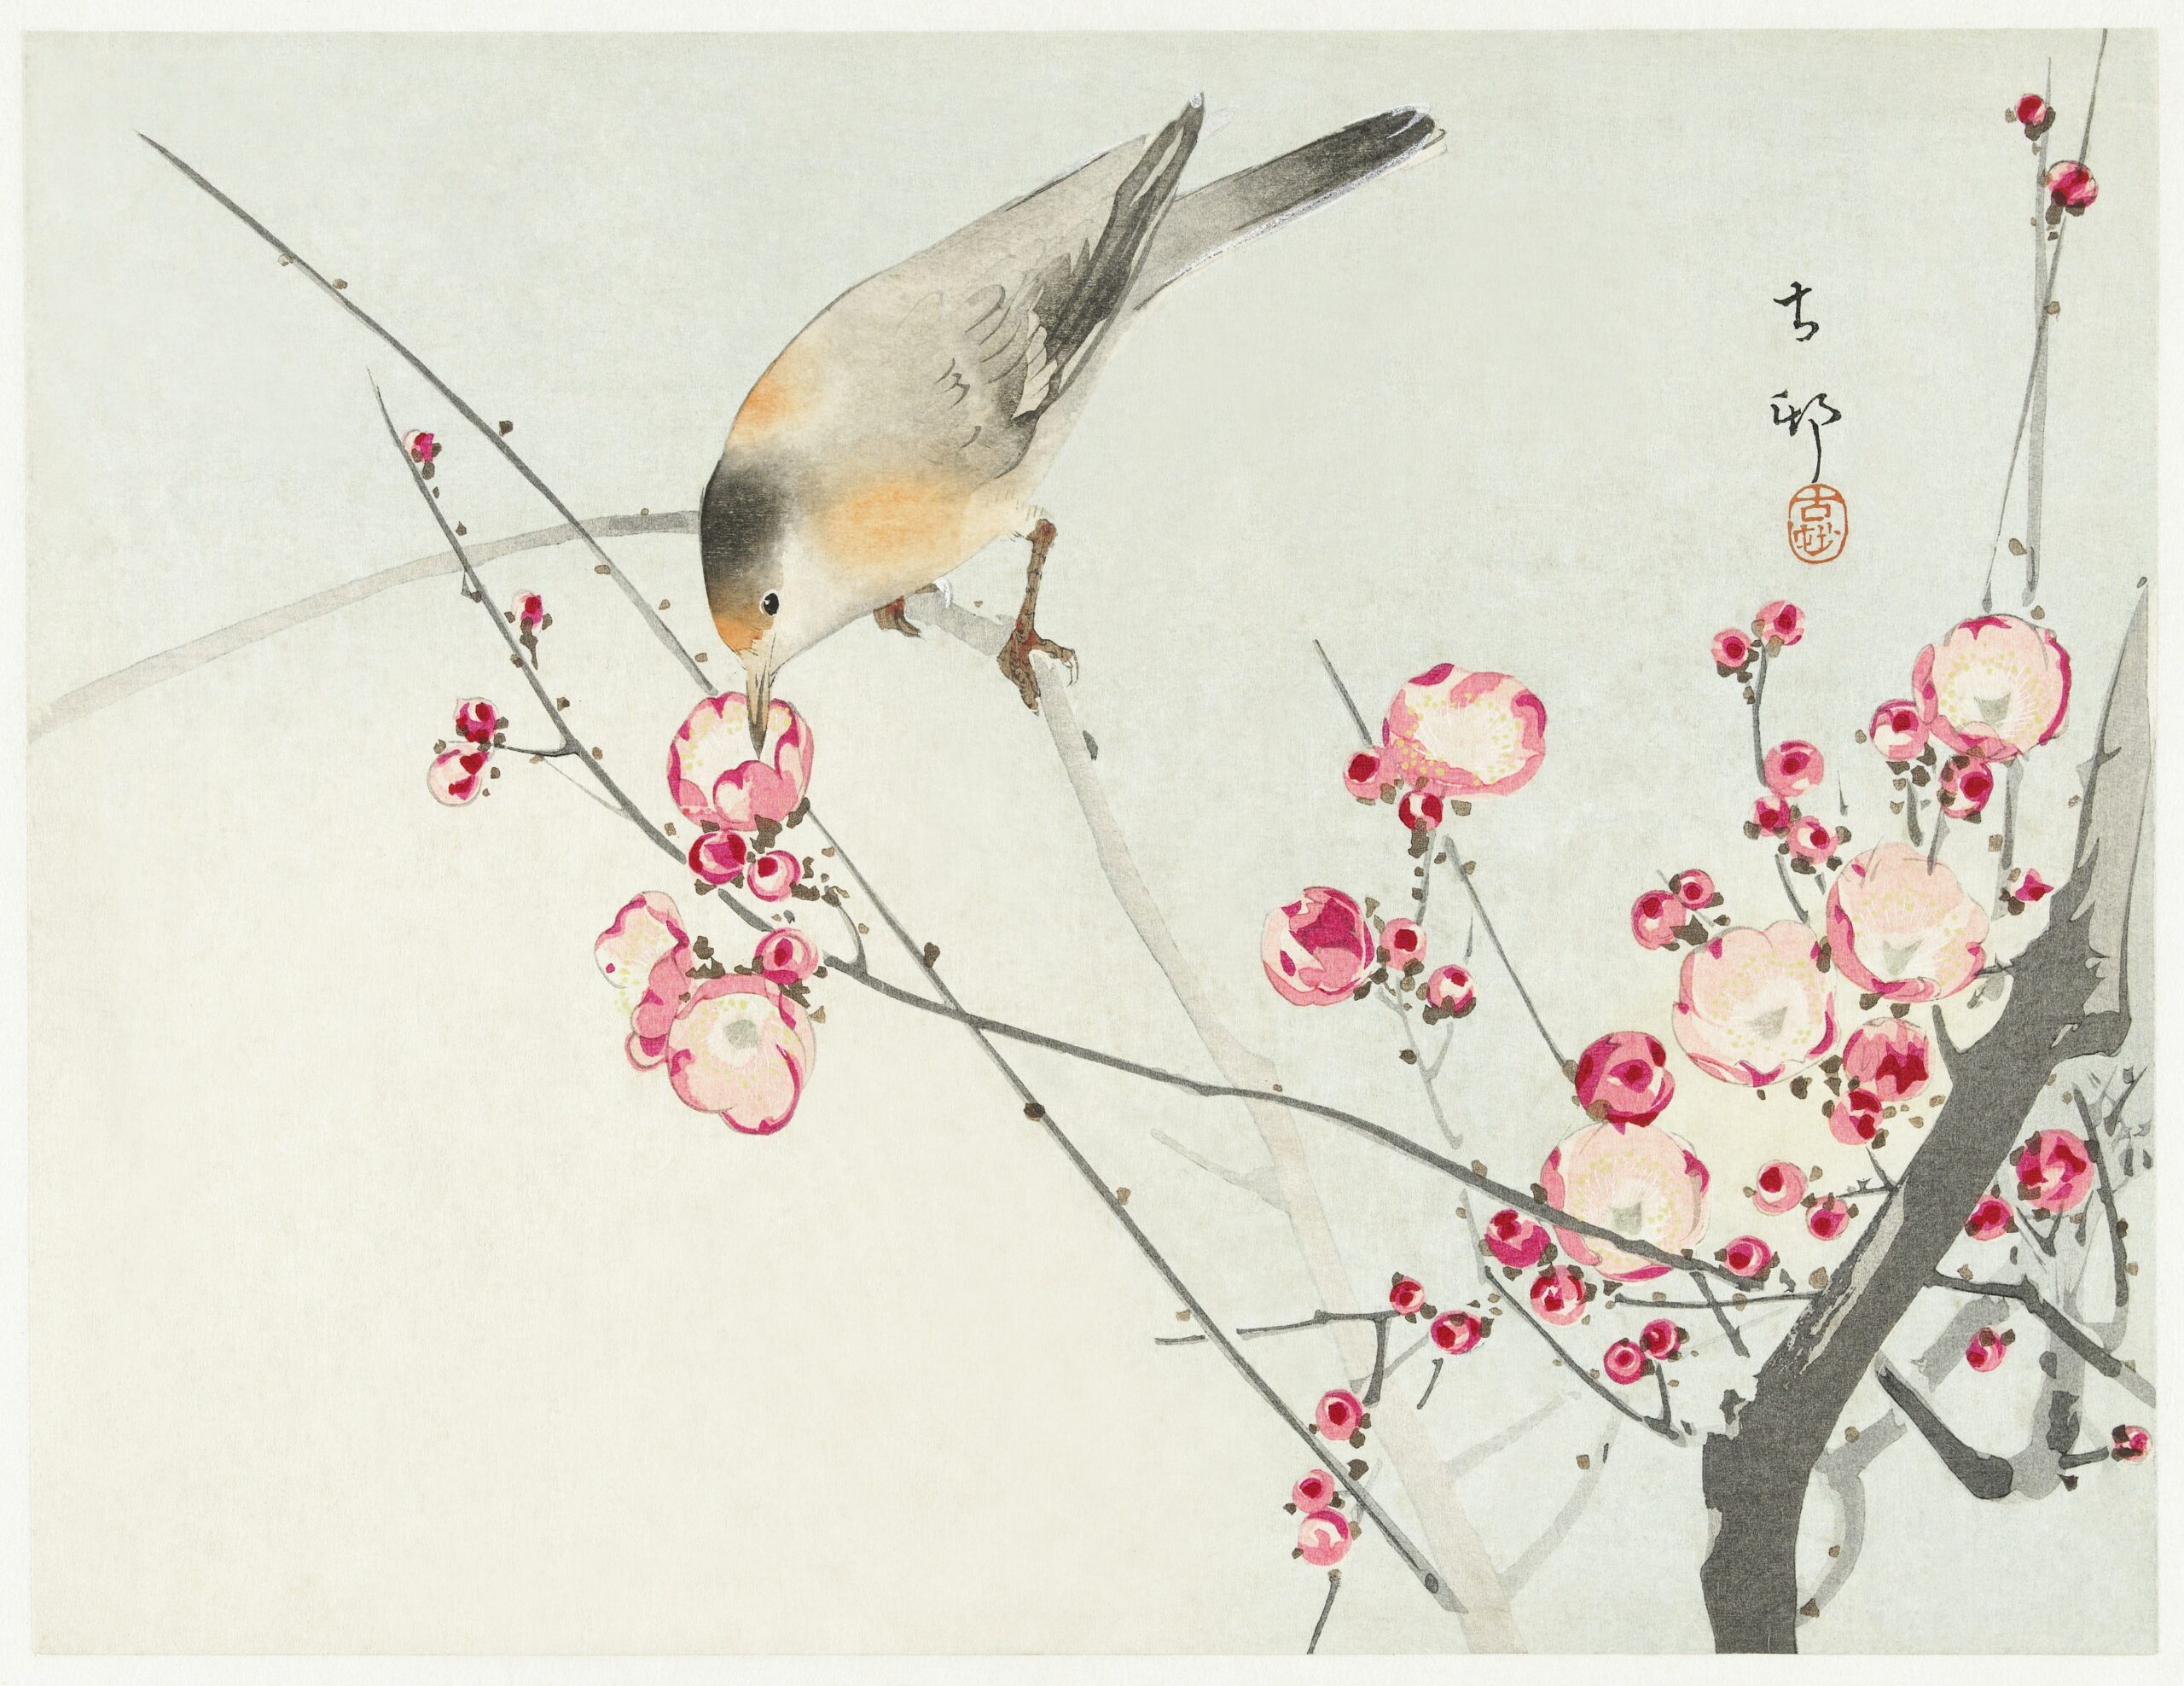 Songbird on blossom branch (1900 - 1936) by Ohara Koson (1877-1945). Original from The Rijksmuseum. Digitally enhanced by rawpixel.